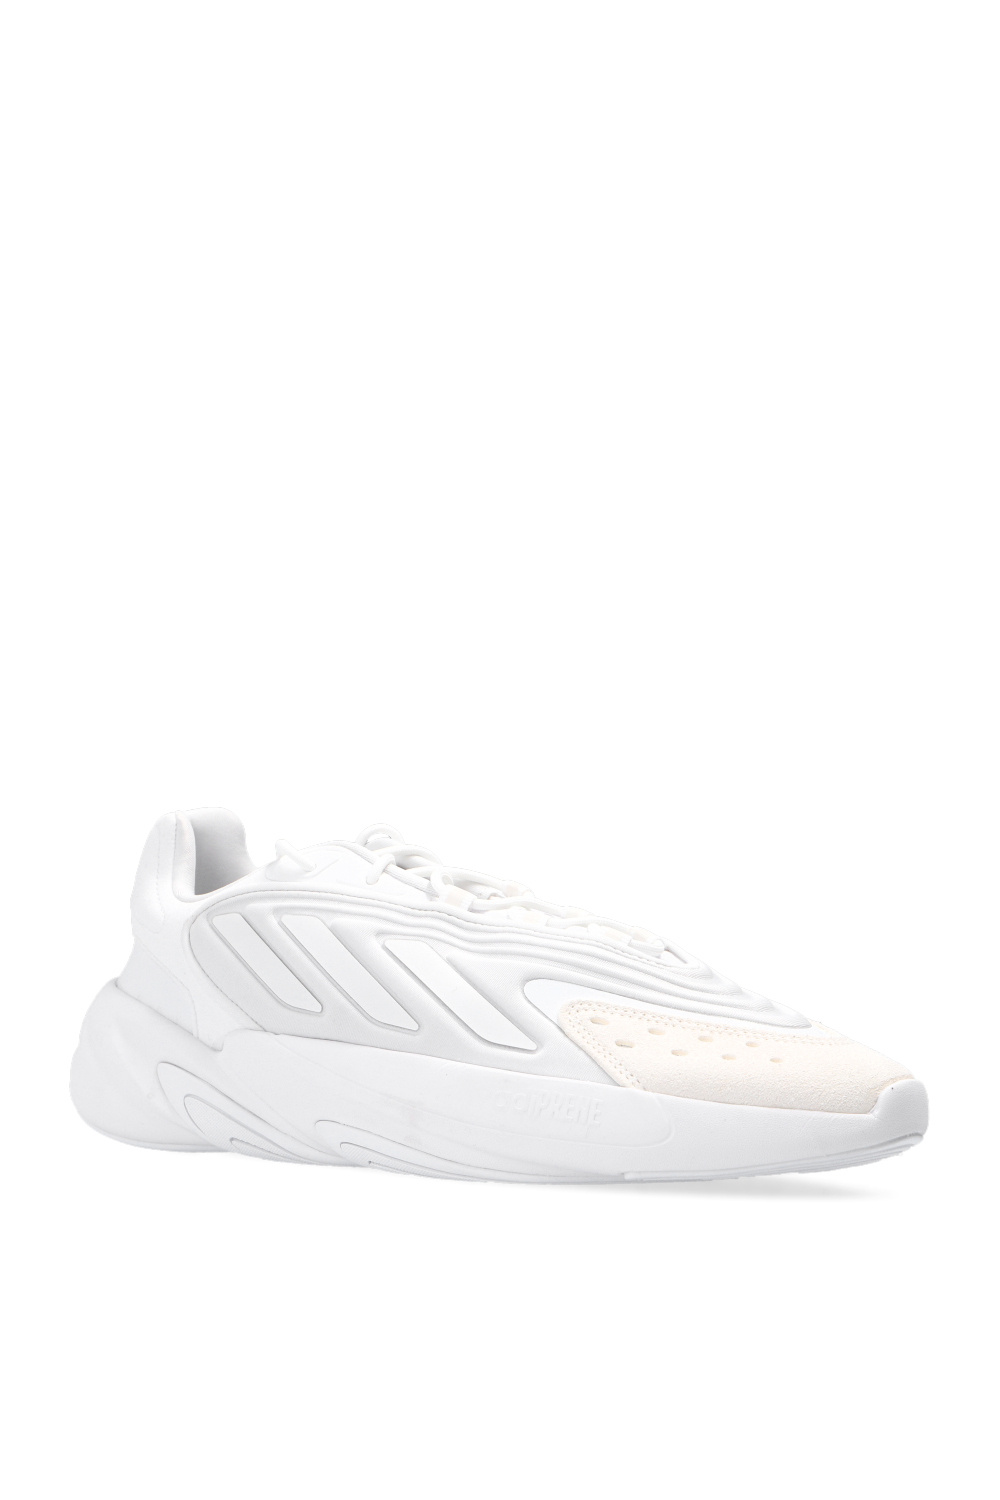 adidas gazelle foot locker shoes - IetpShops - 'Ozelia' sneakers ADIDAS Originals